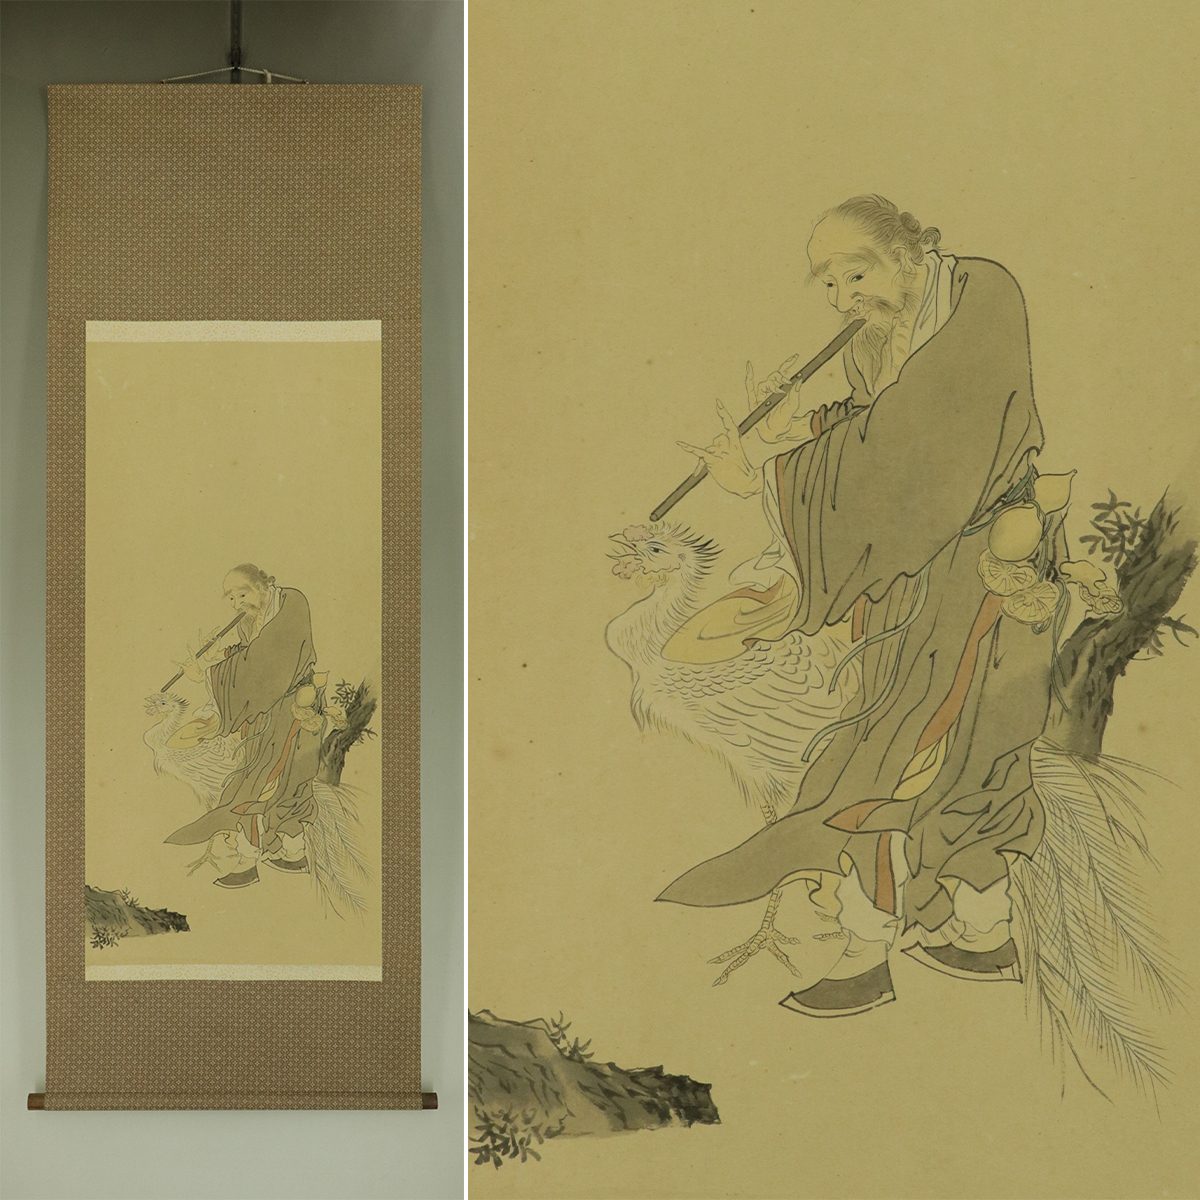 [Escrito a mano] Pintura antigua [Ermitaño pavo real] ◆ Tapa blanda ◆ Pergamino colgante u12030b, cuadro, pintura japonesa, persona, Bodhisattva